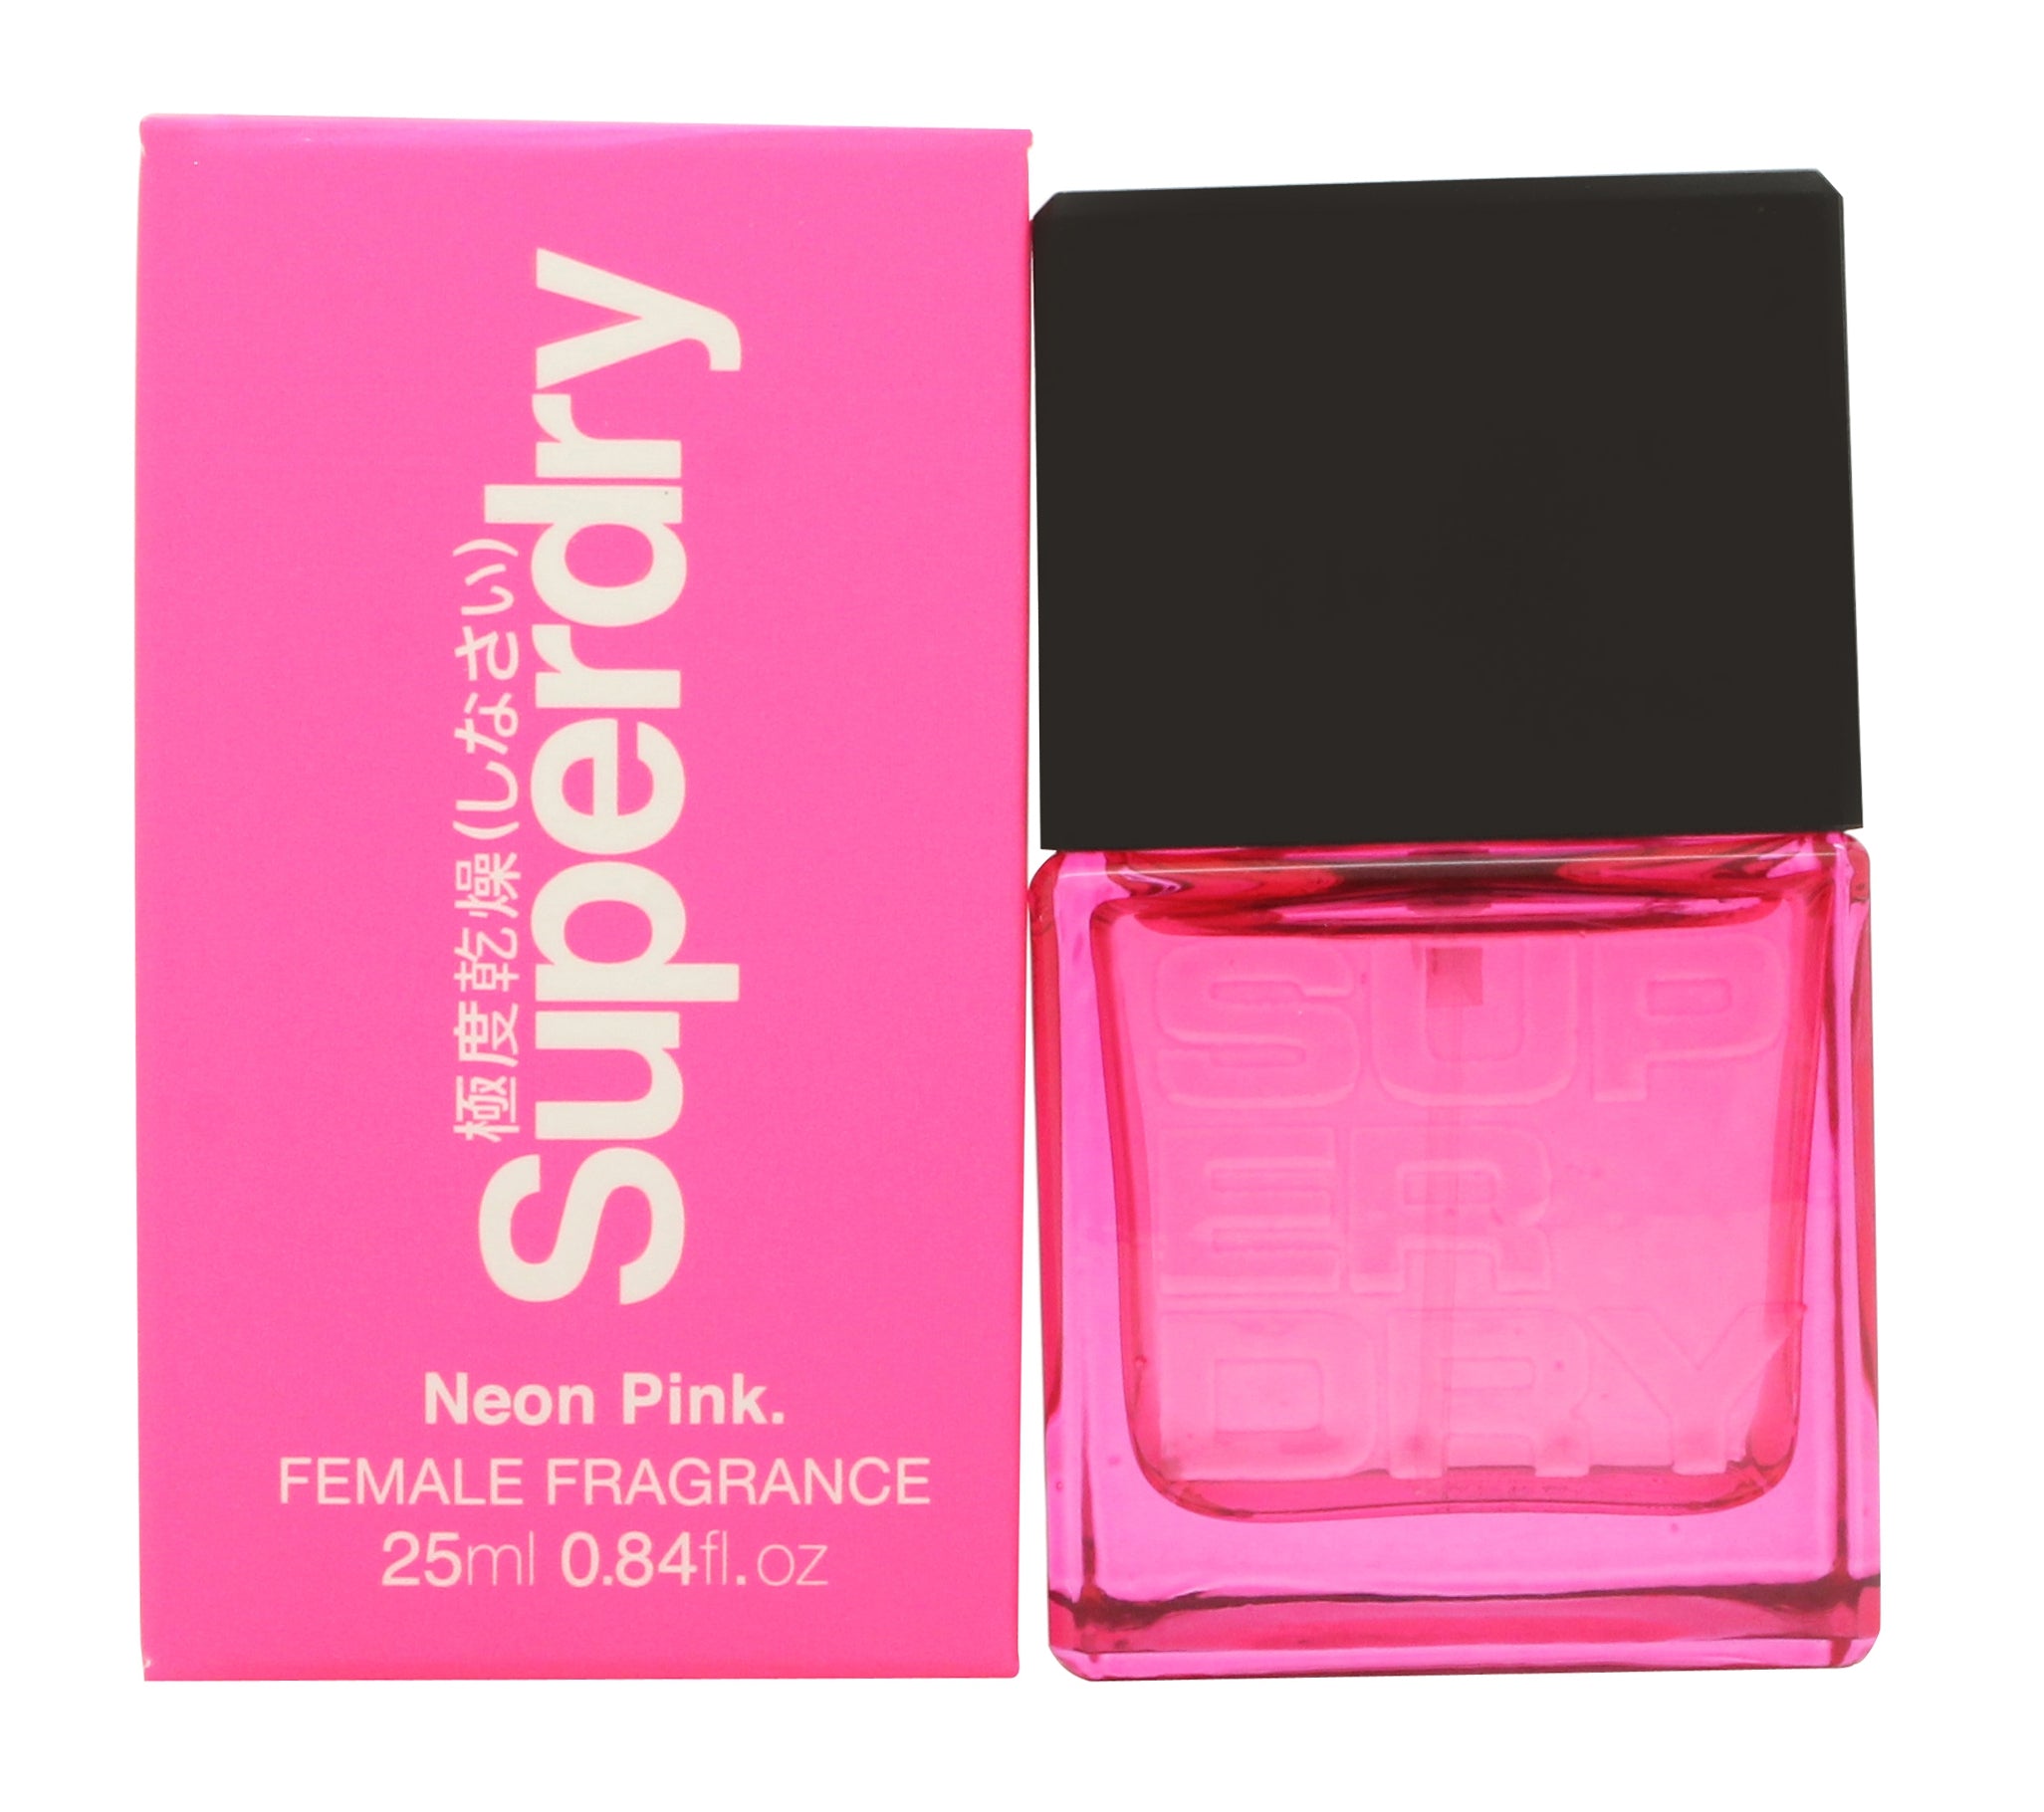 View Superdry Neon Pink Eau de Cologne 25ml Spray information